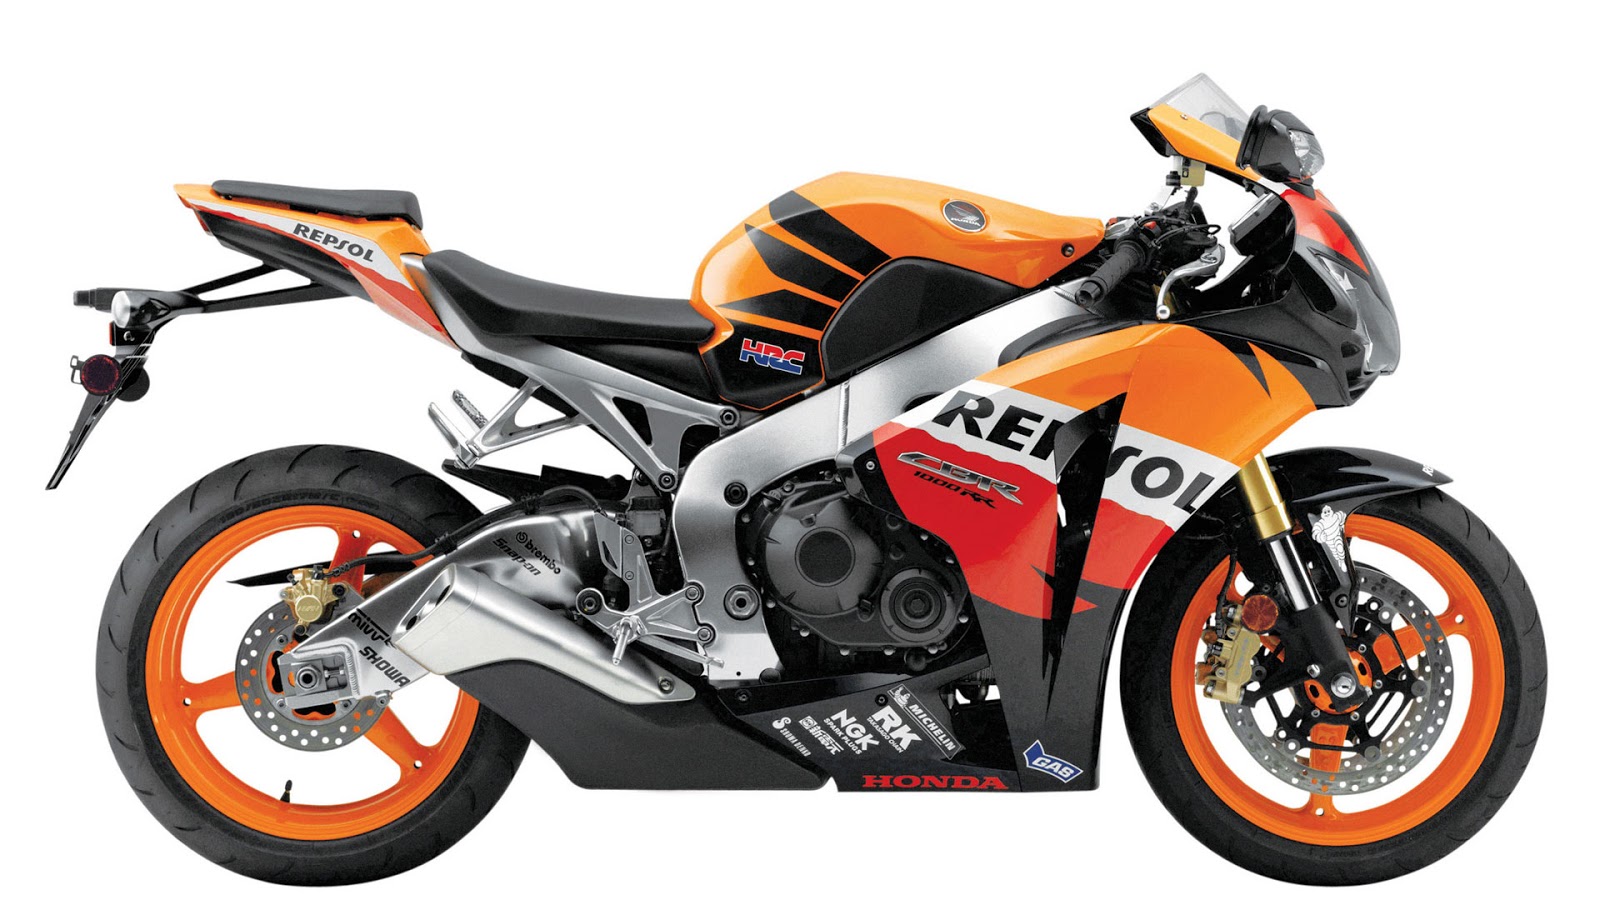 yamaha sports bikes fondos de pantalla,vehículo terrestre,vehículo,motocicleta,naranja,carreras de superbike